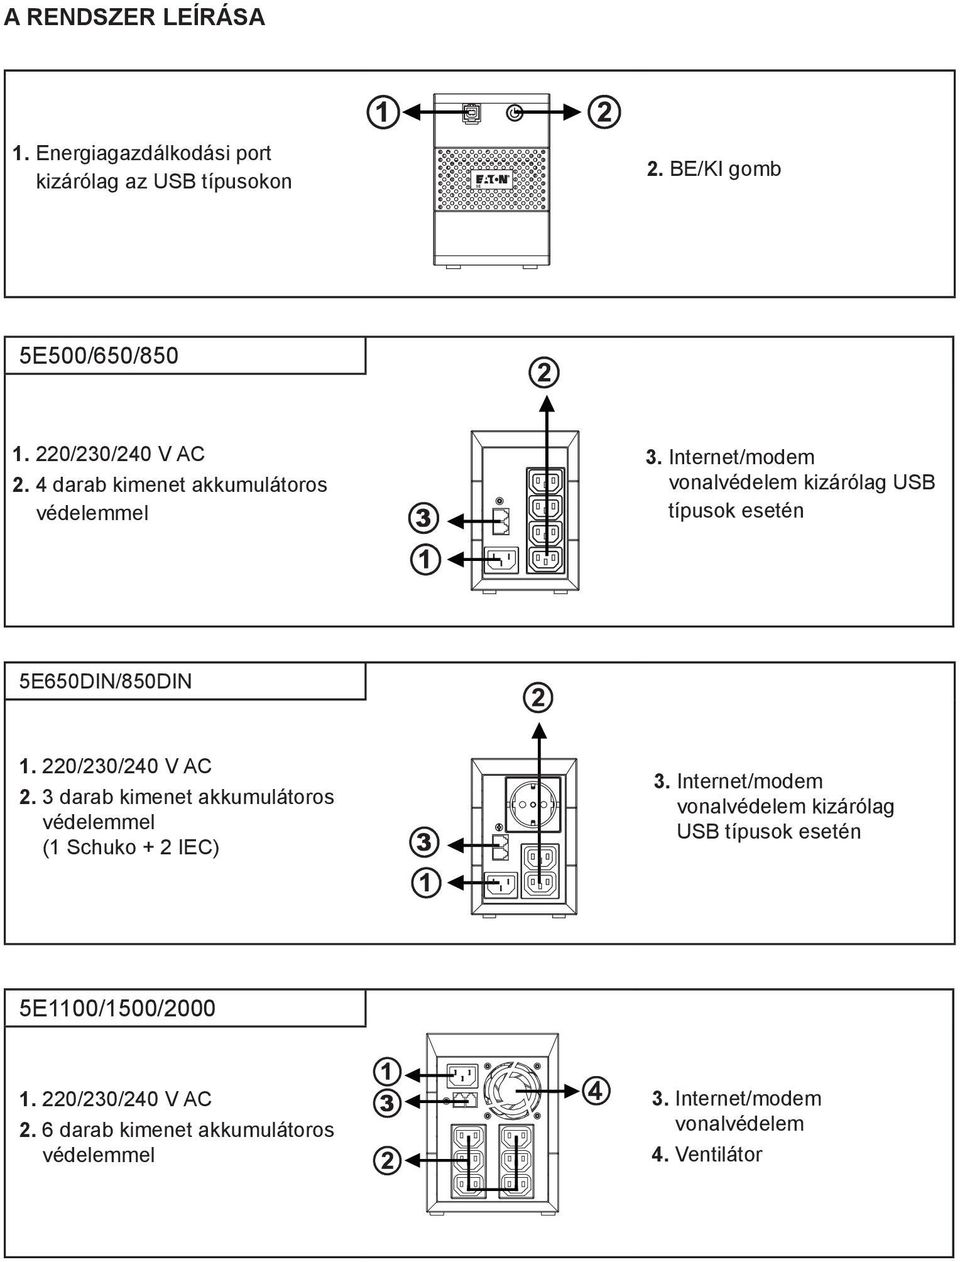 220/230/240 V AC 2. 3 darab kimenet akkumulátoros védelemmel (1 Schuko + 2 IEC) 3.